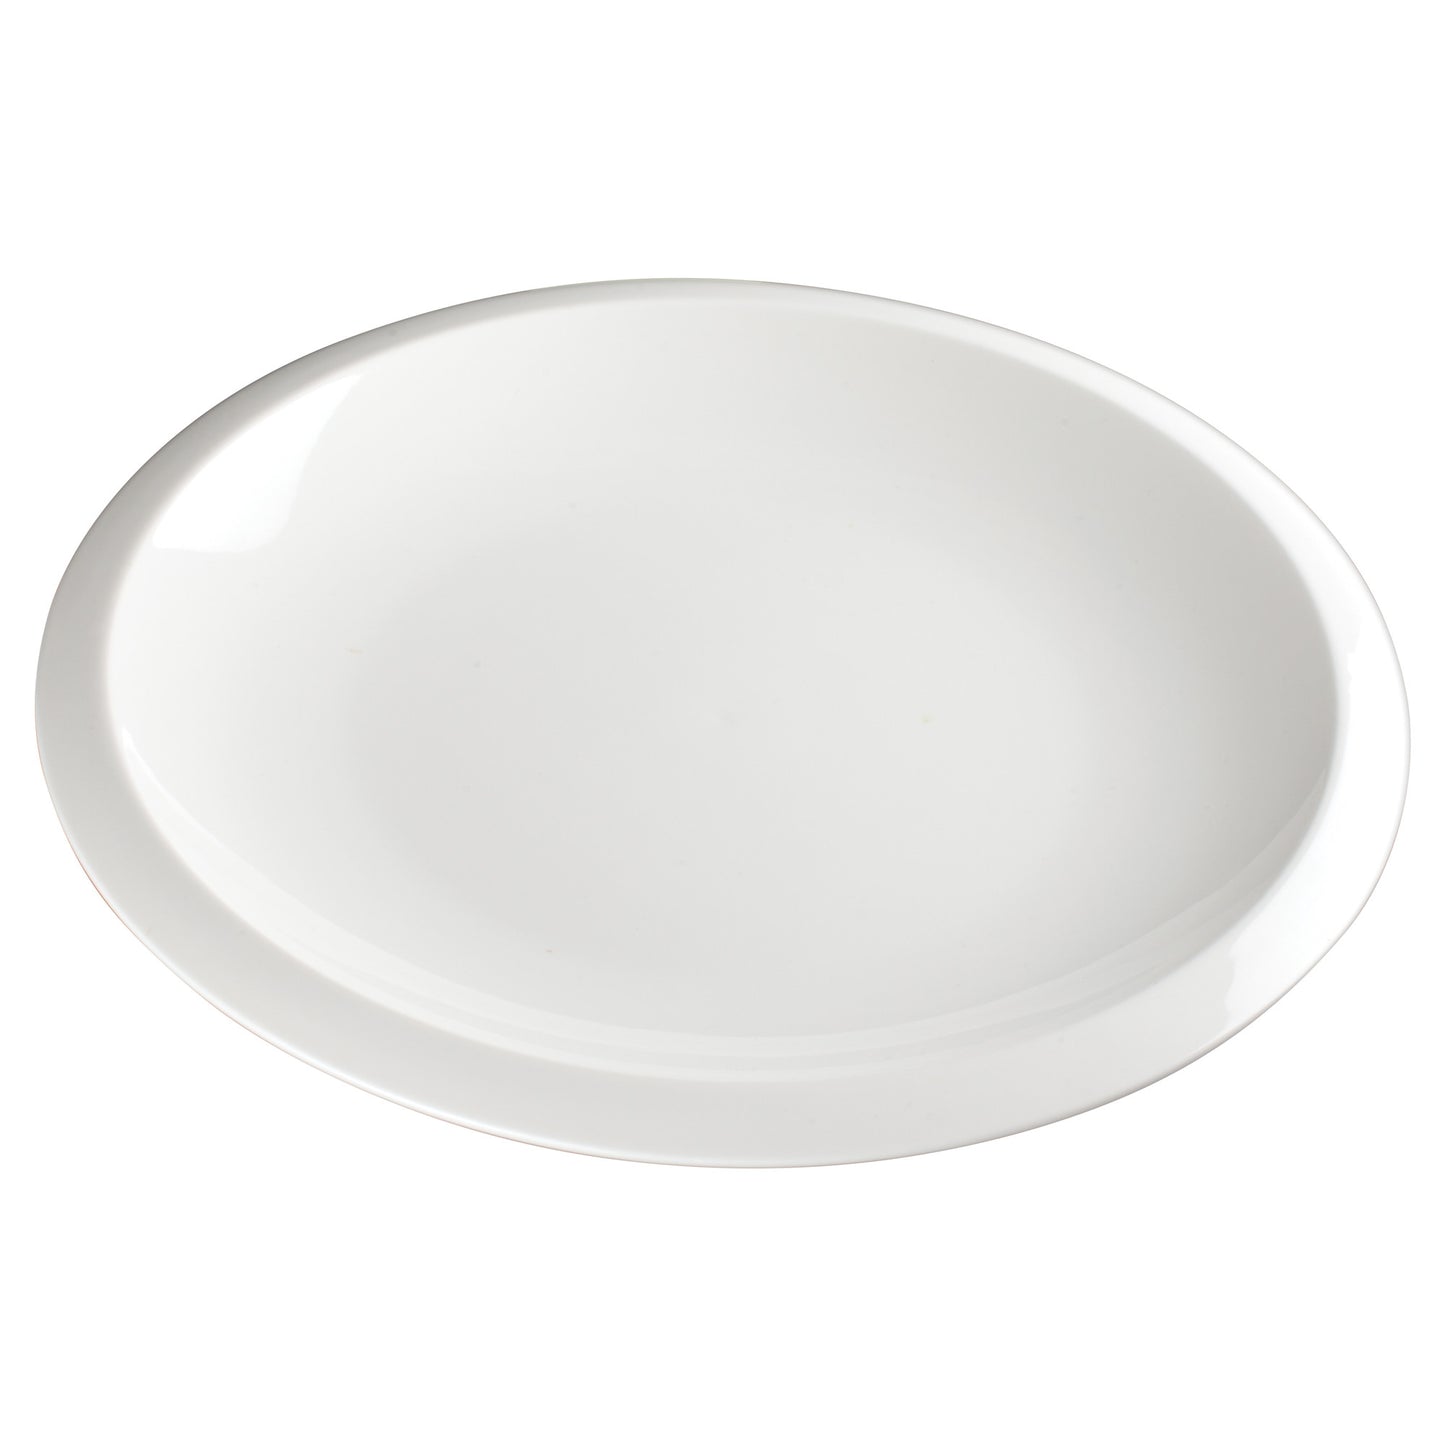 WDP006-203 - 12-1/2"Dia. Porcelain Round Platter, Creamy White, 12 pcs/case